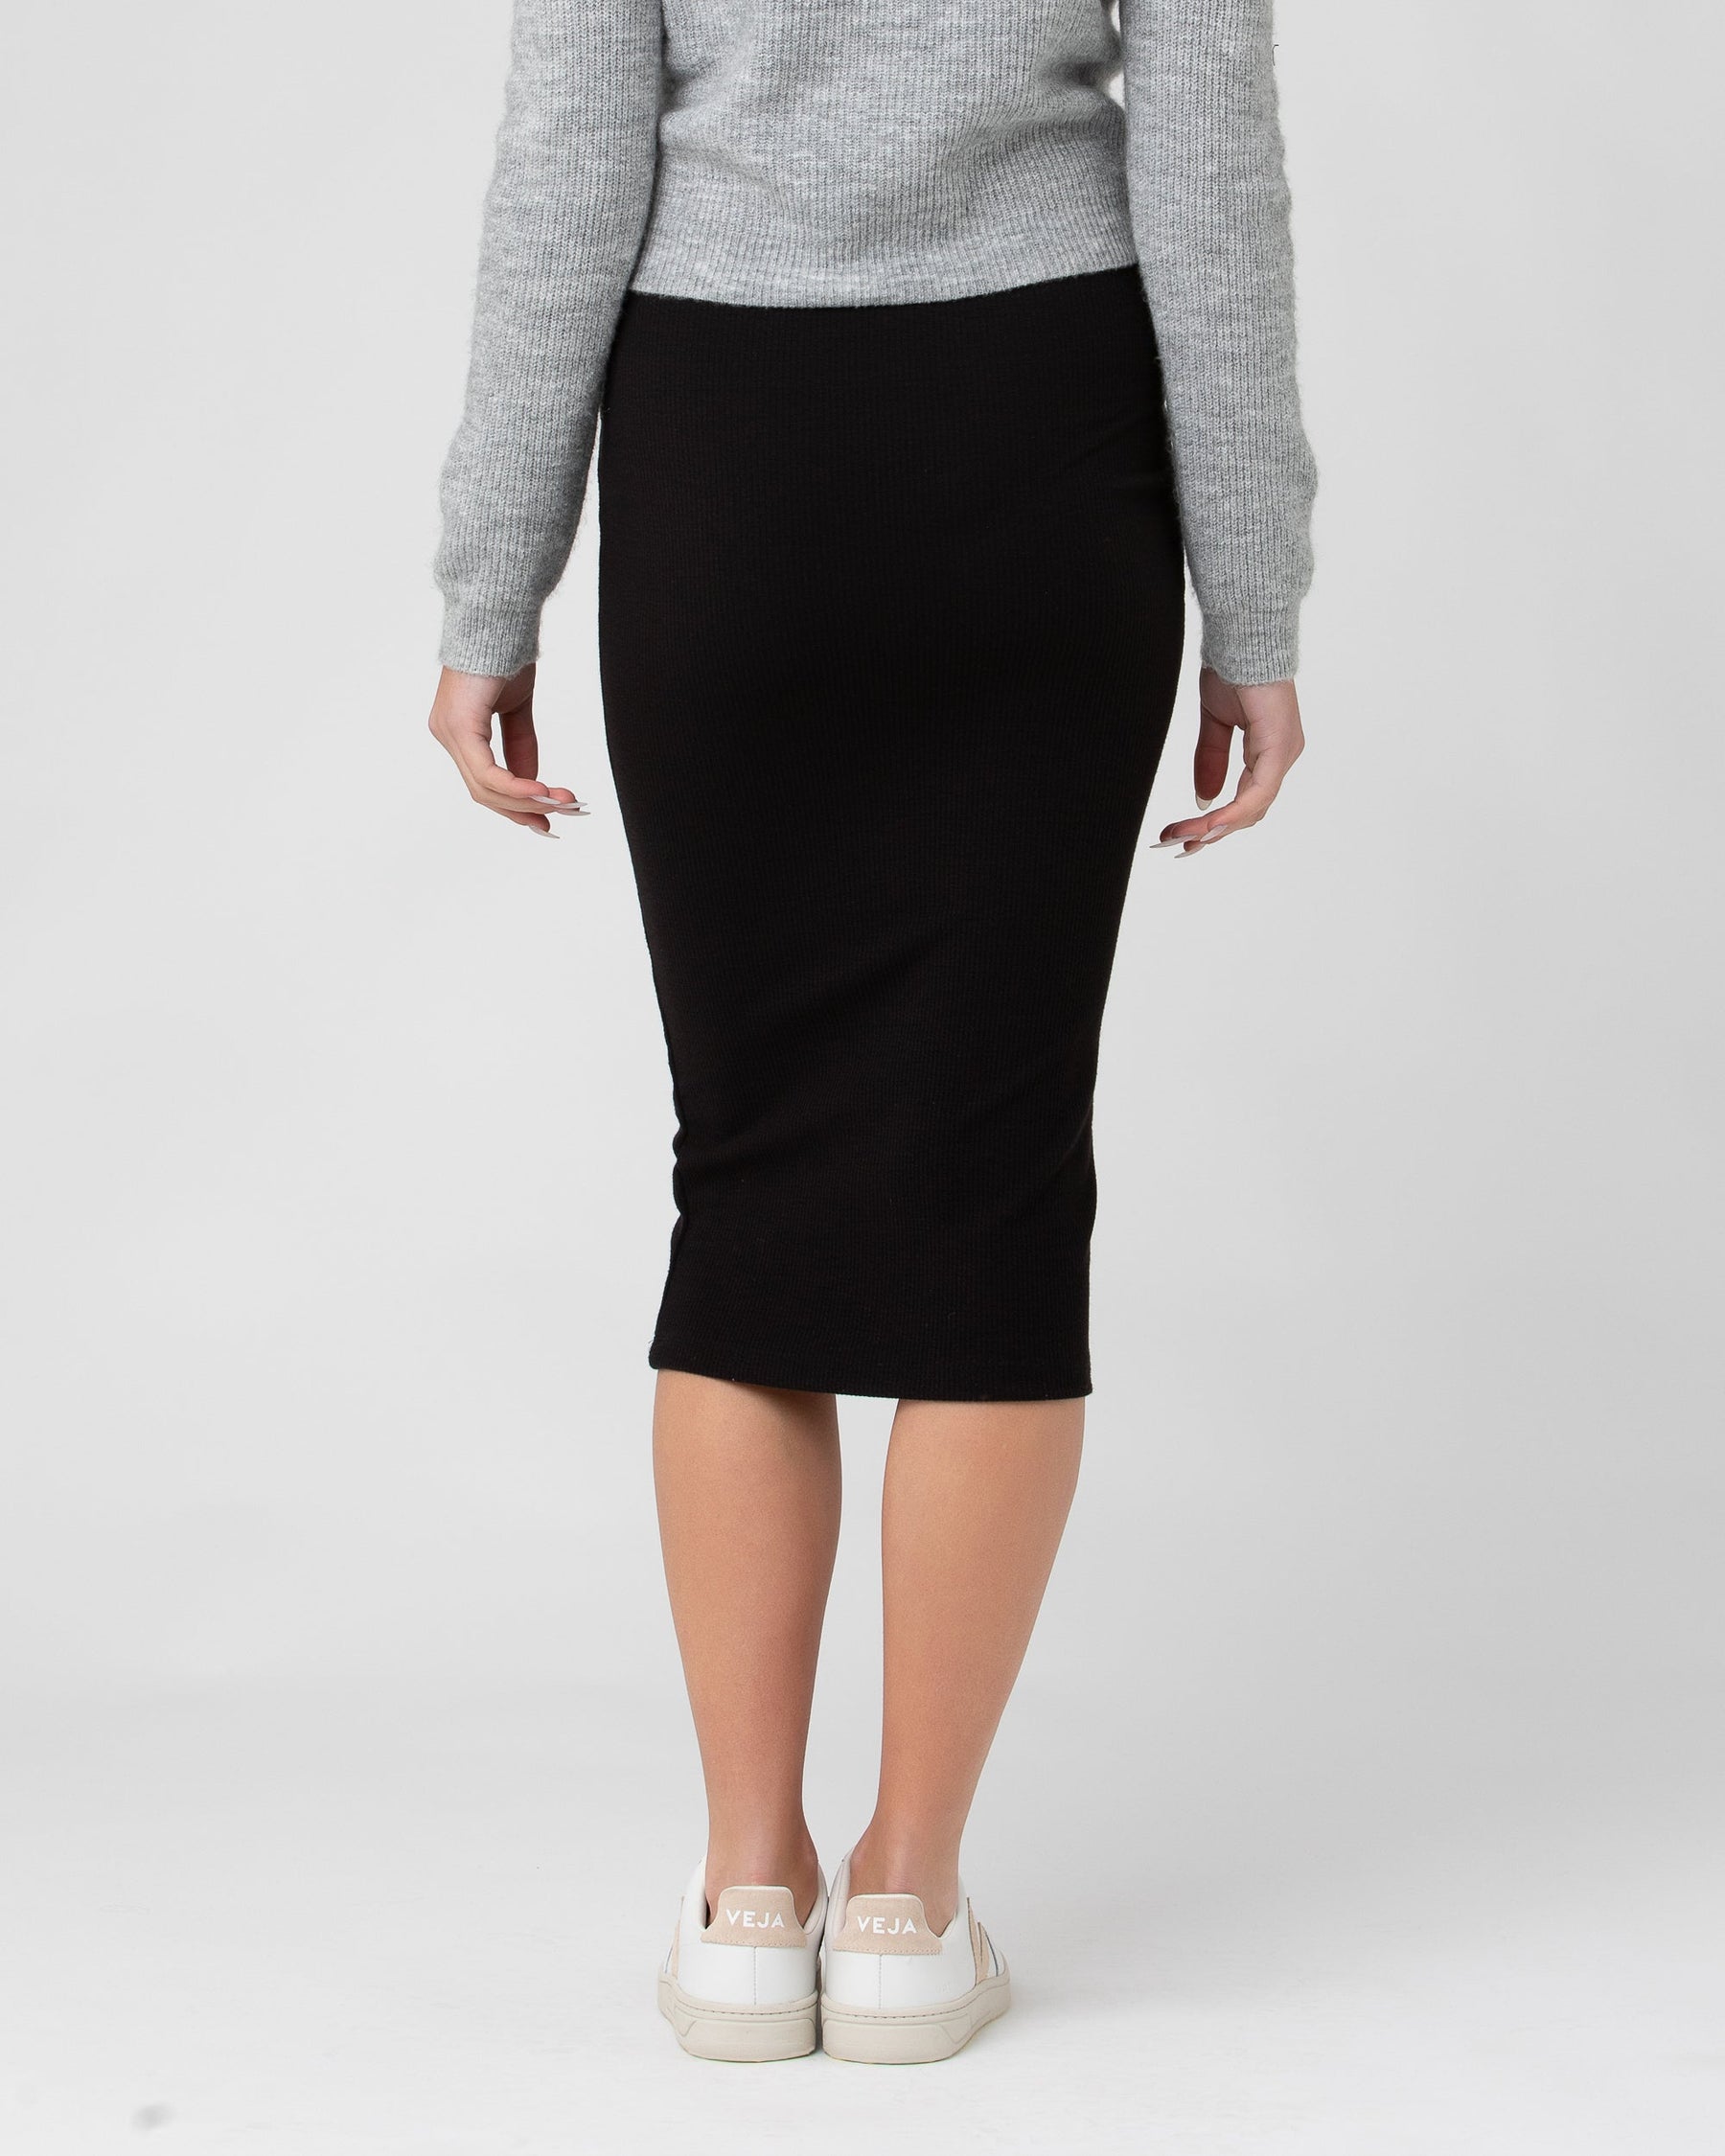 Ribbed Knit Pencil Skirt - Black